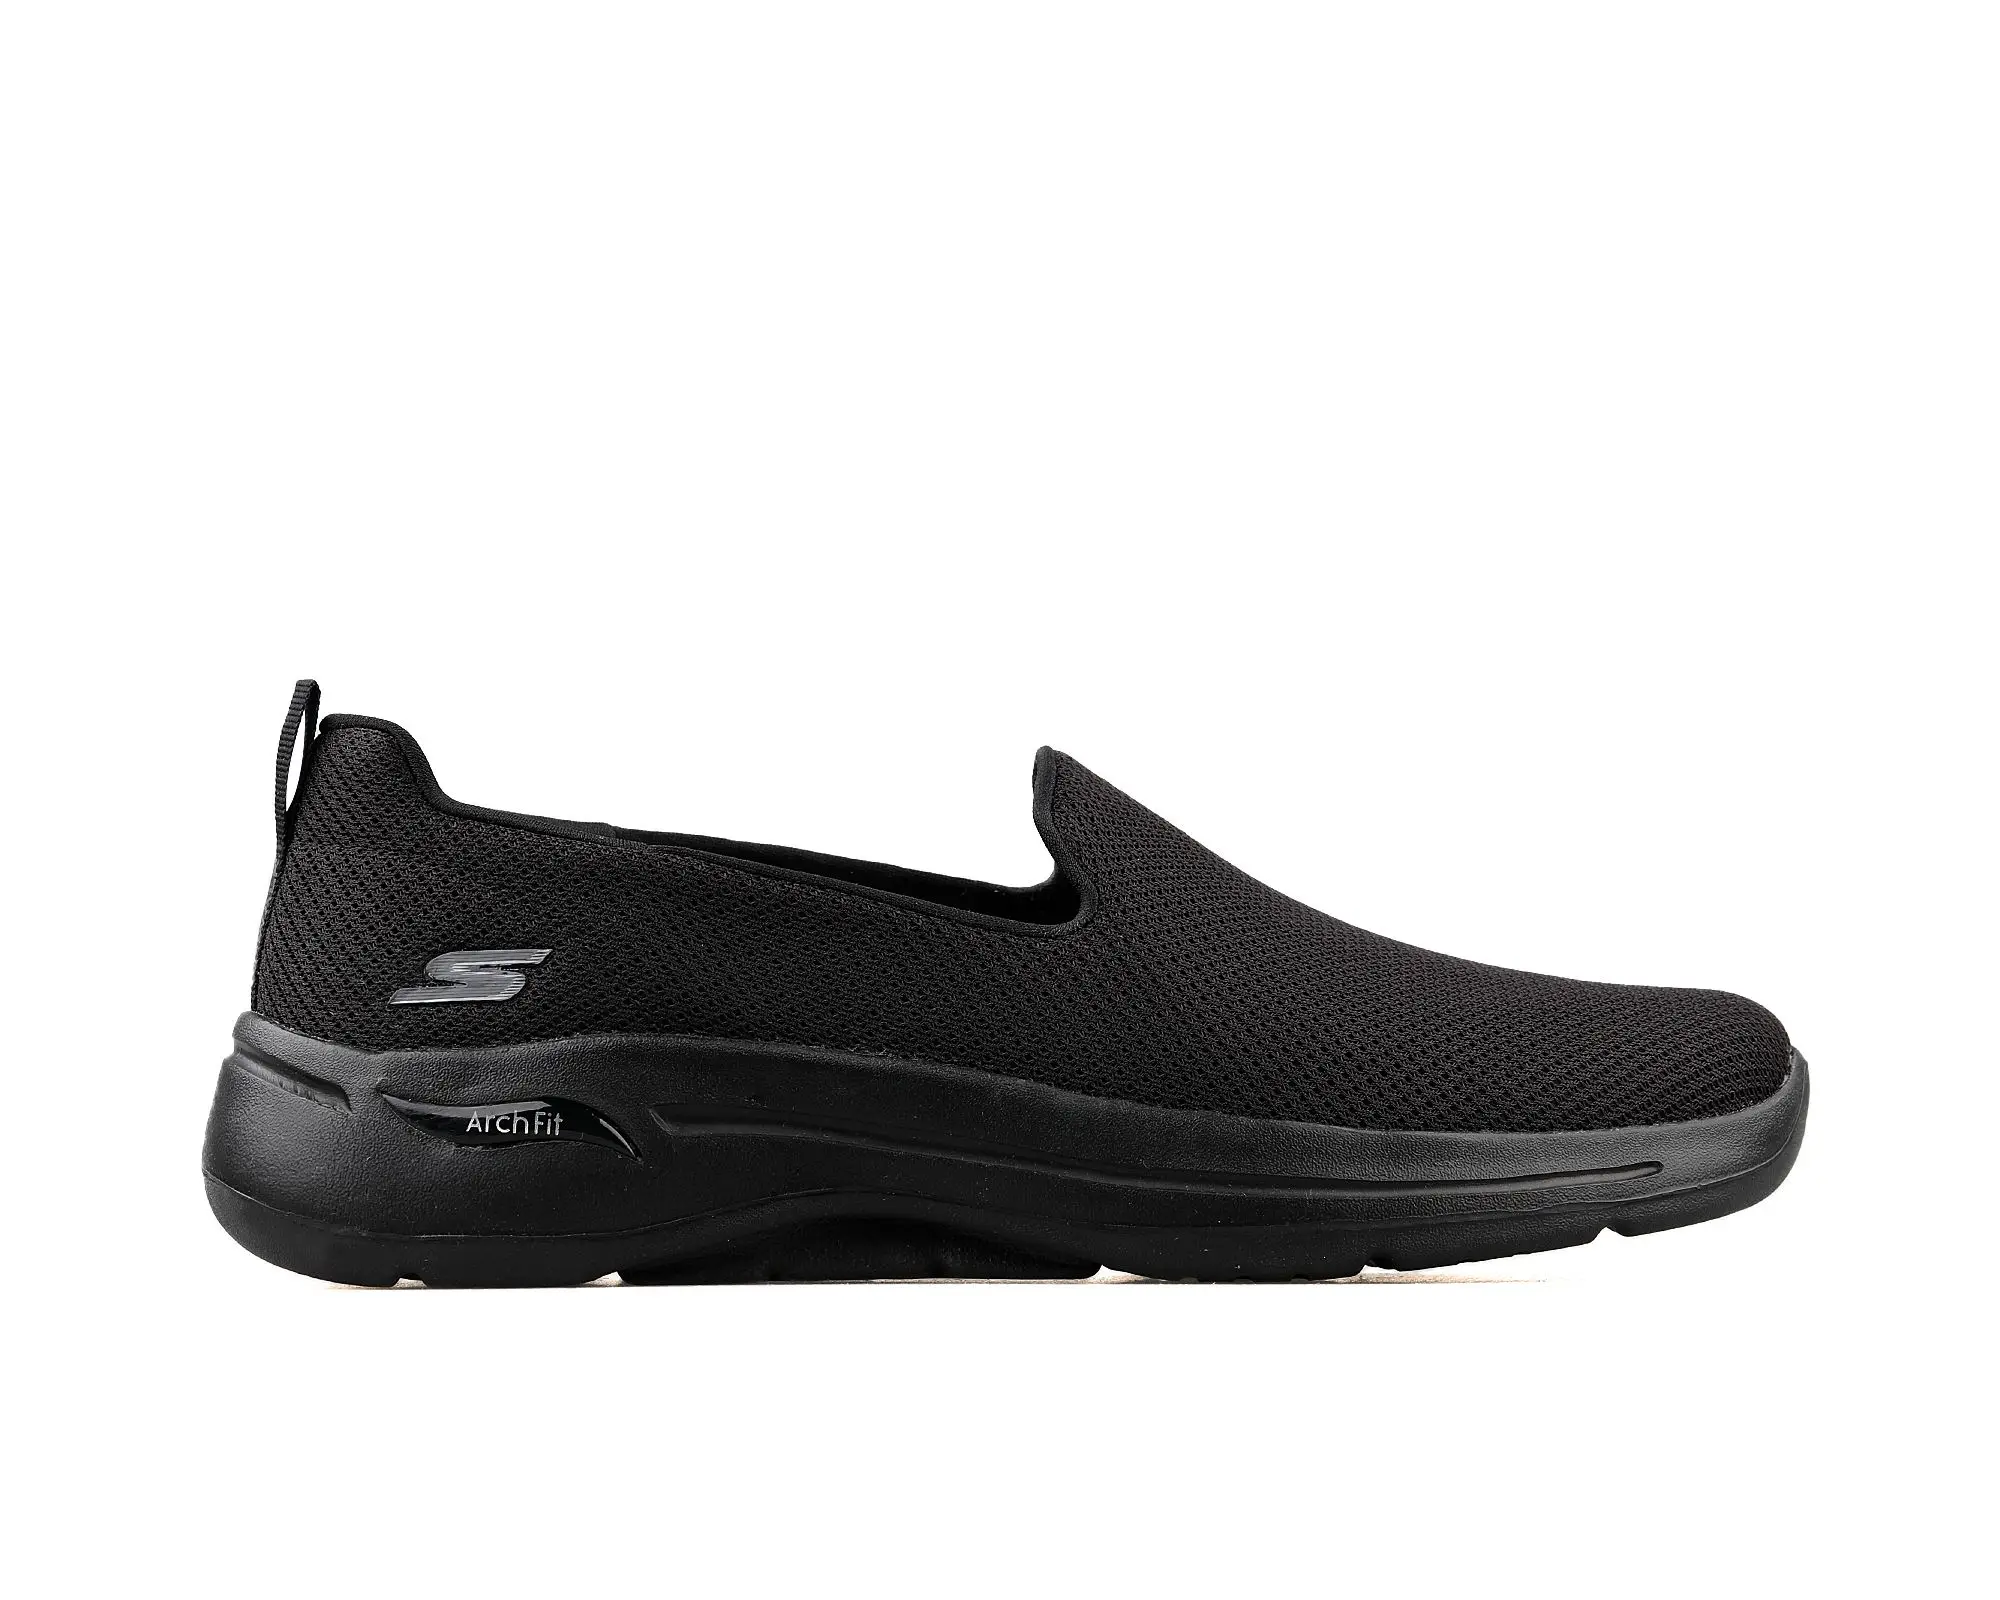 

Skechers Original Go Walk Arch Fit Shoes Women's Sneakers Fashion Casual Shoes Women Flats Soft Sole Black Women Shoes